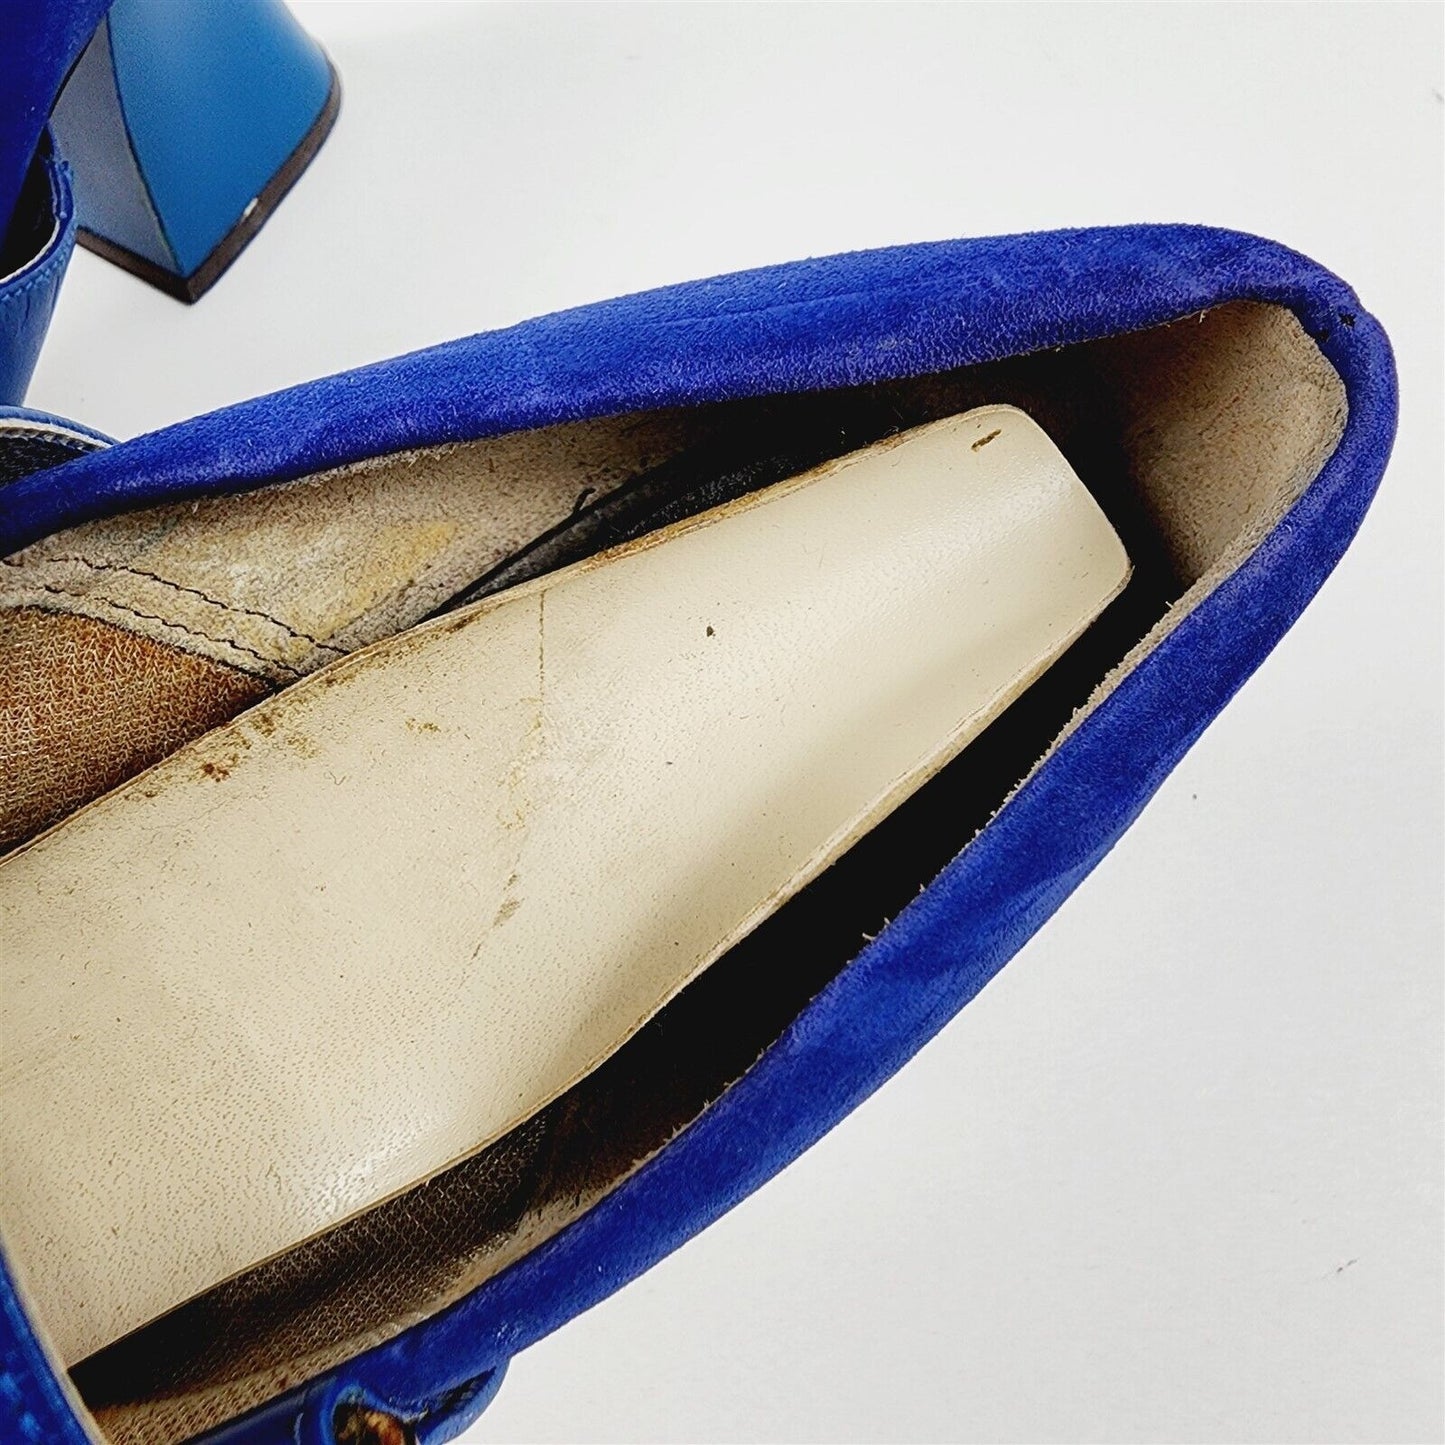 Vintage 1960s Quali Craft Blue Suede Leather Mary Jane Asymmetric Block Heels